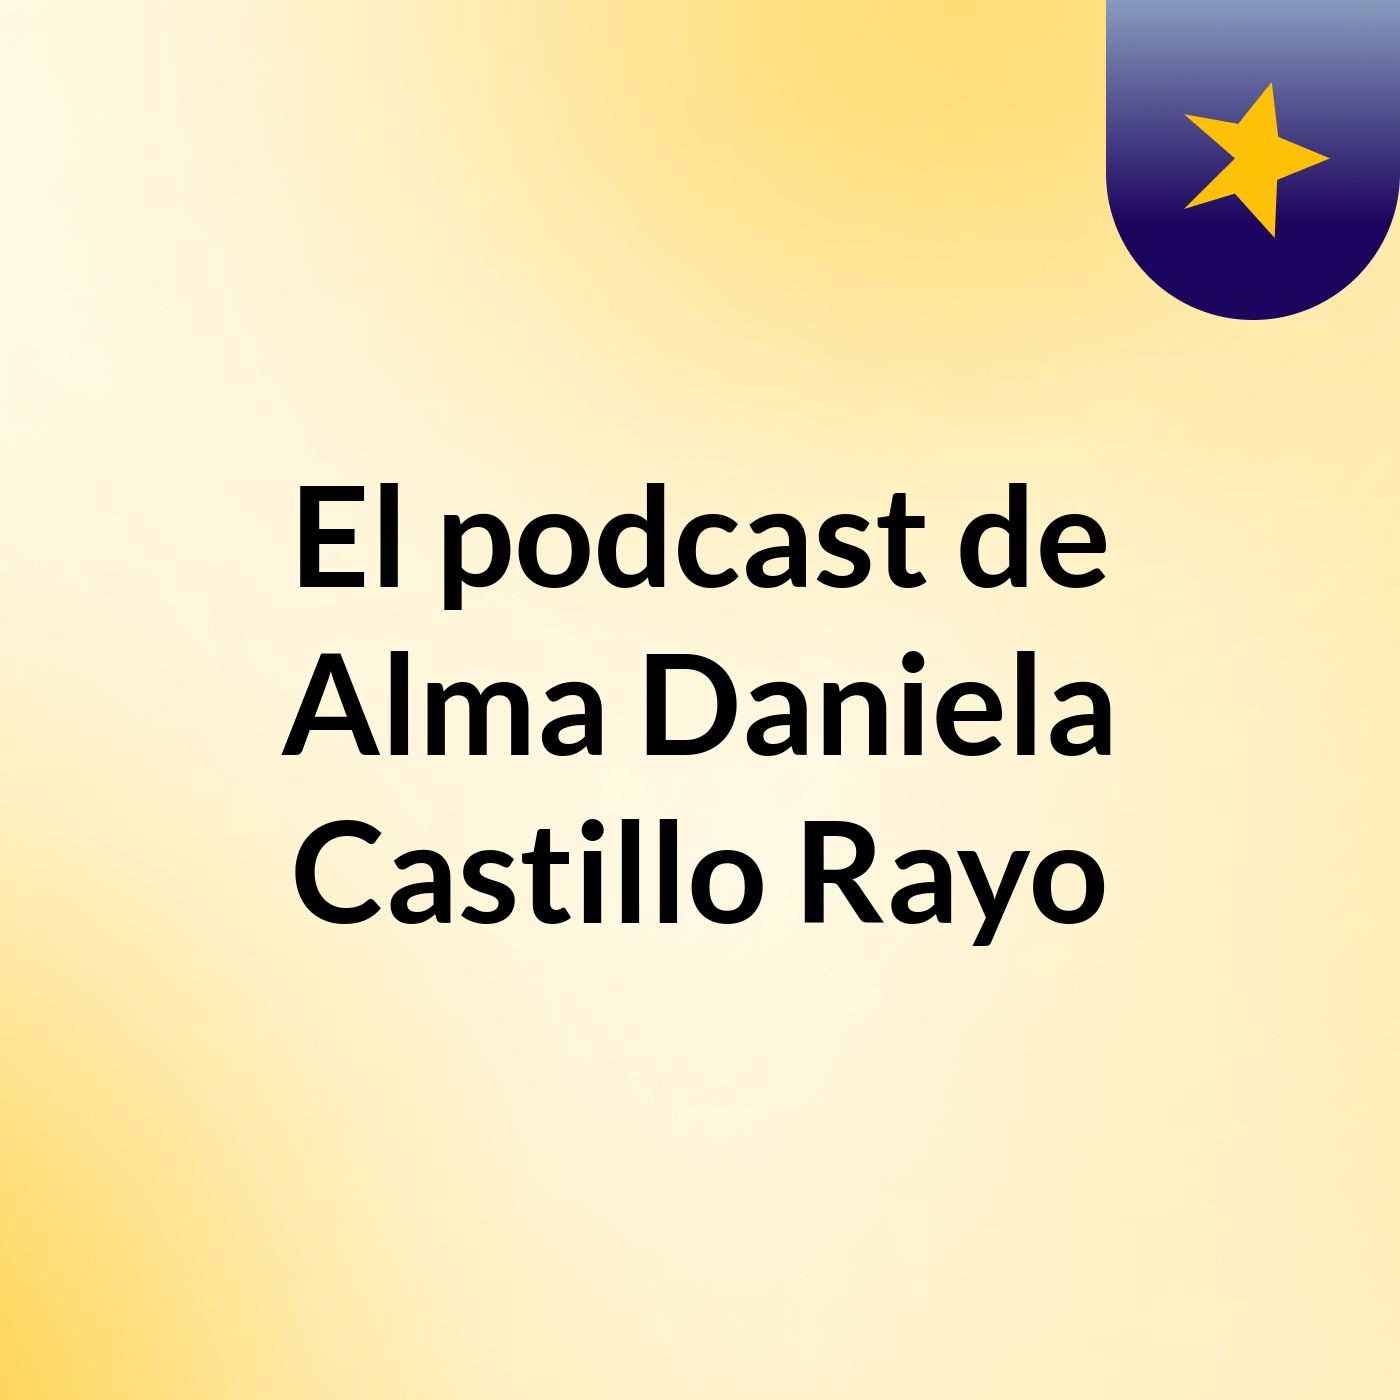 El podcast de Alma Daniela Castillo Rayo